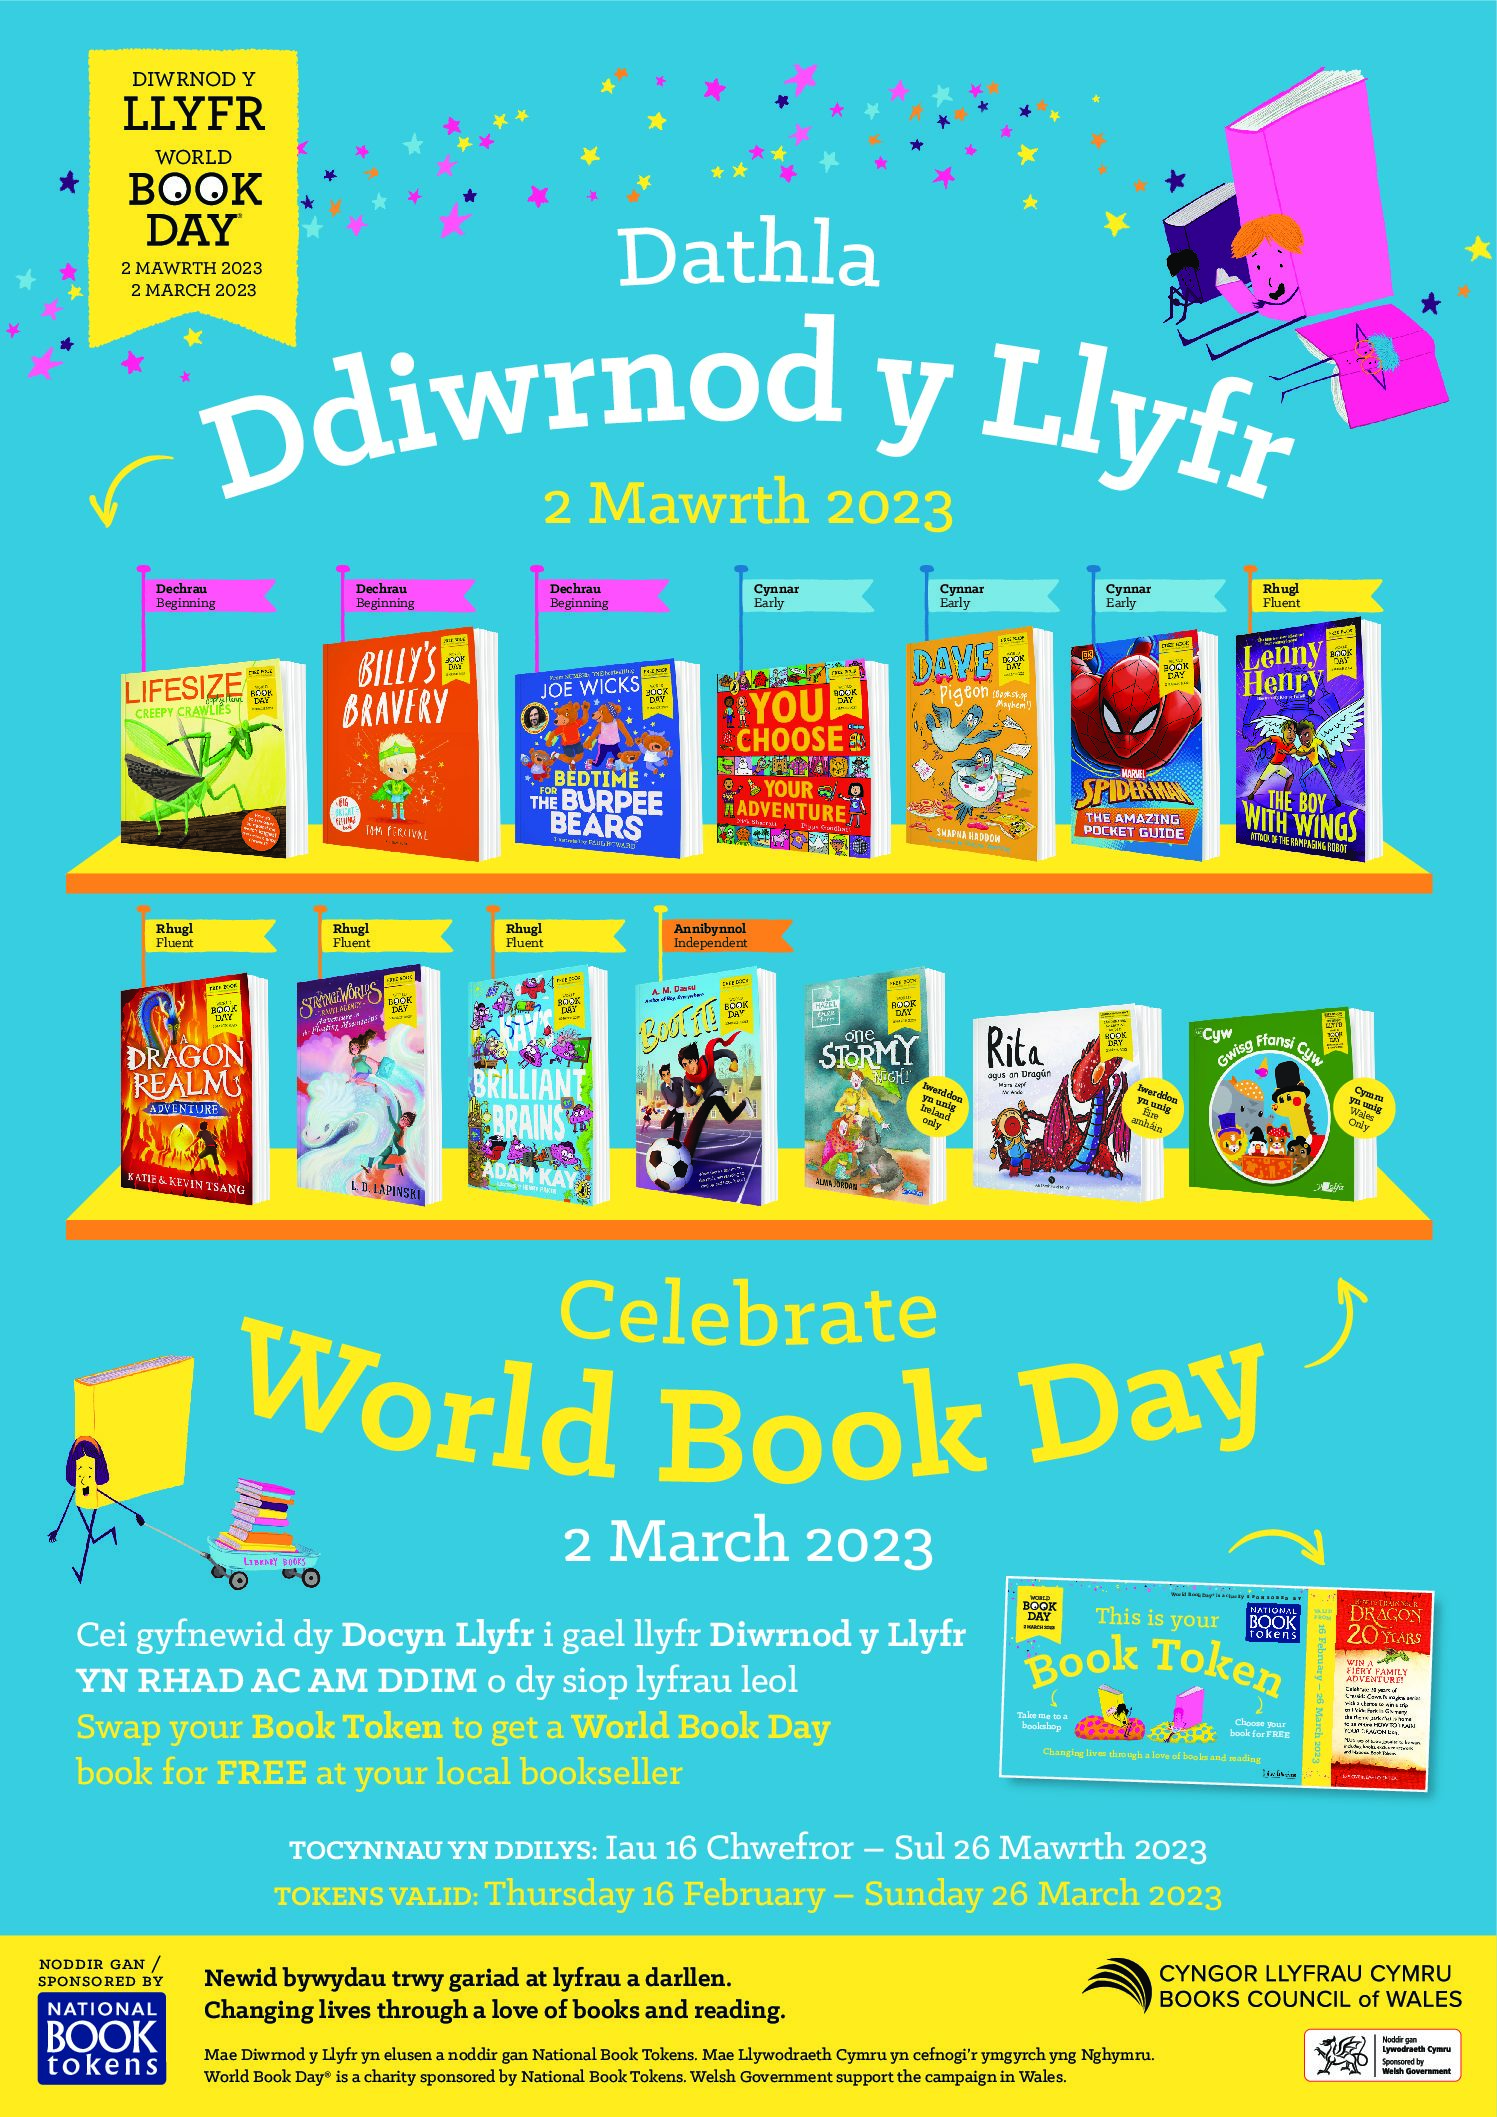 Welsh-language £1 Books